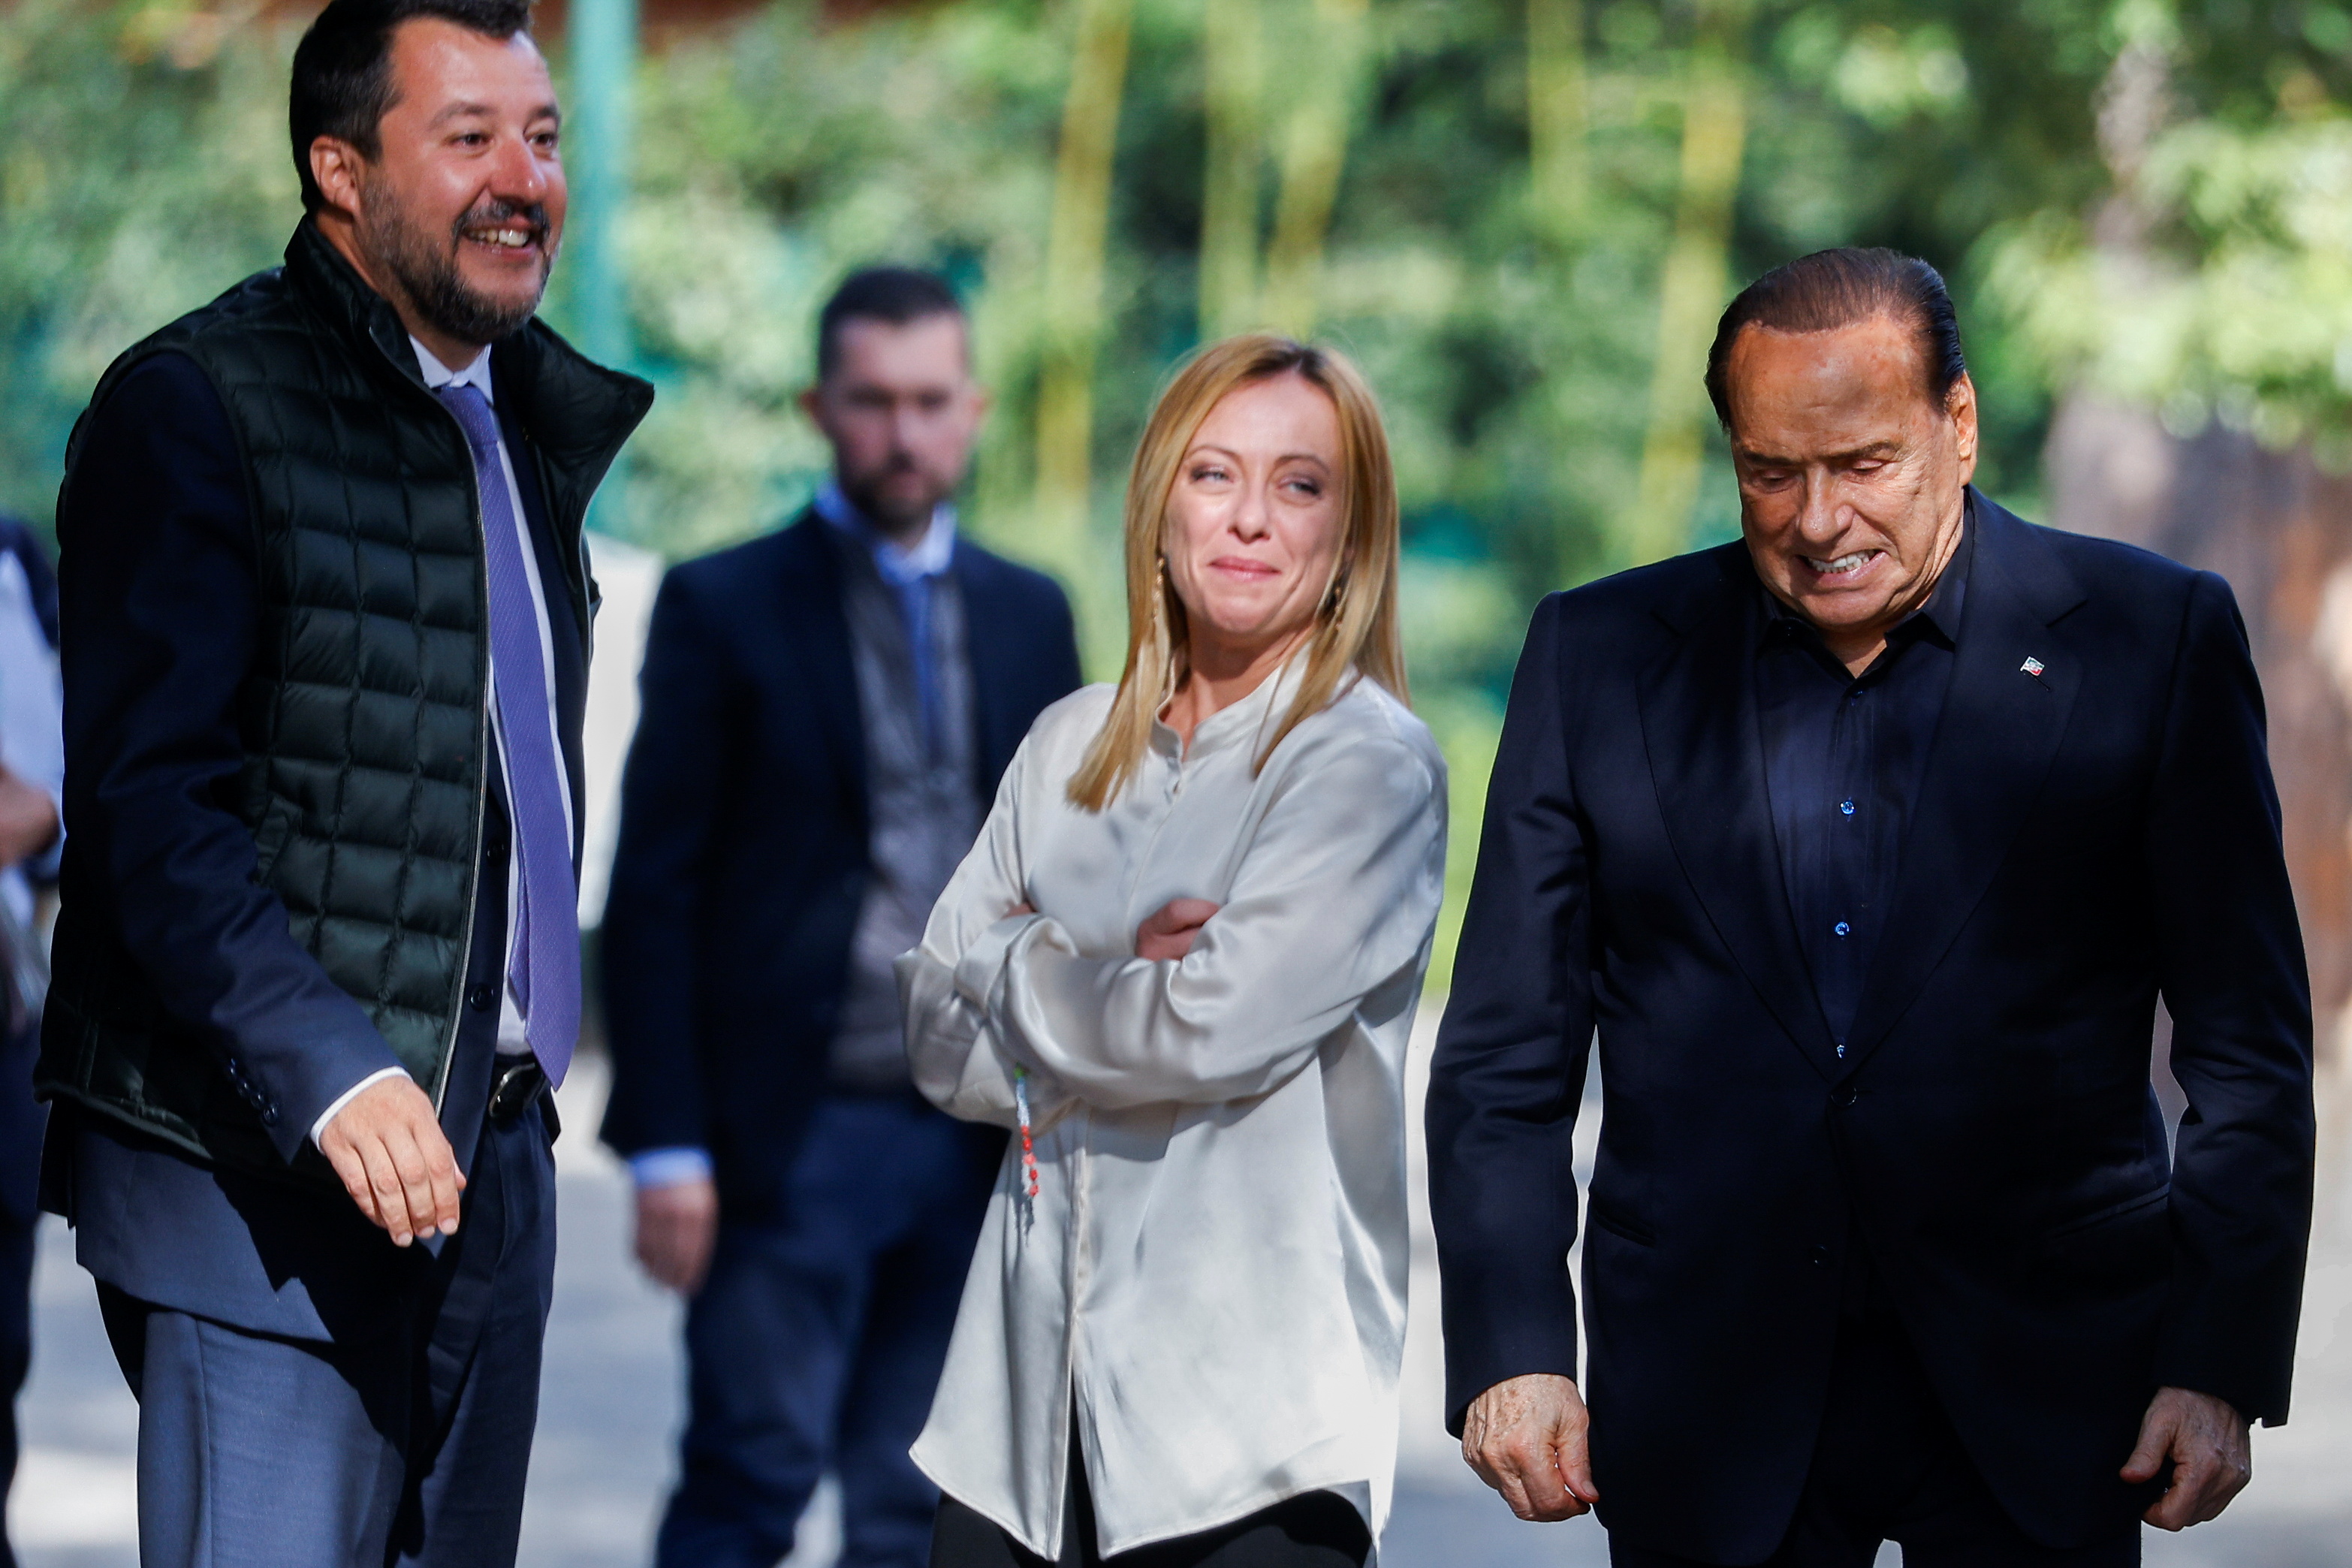 Od lewej: Matteo Salvini, Giorgia Meloni i Silvio Berlusconi. Rzym, 20.10.2021 r.